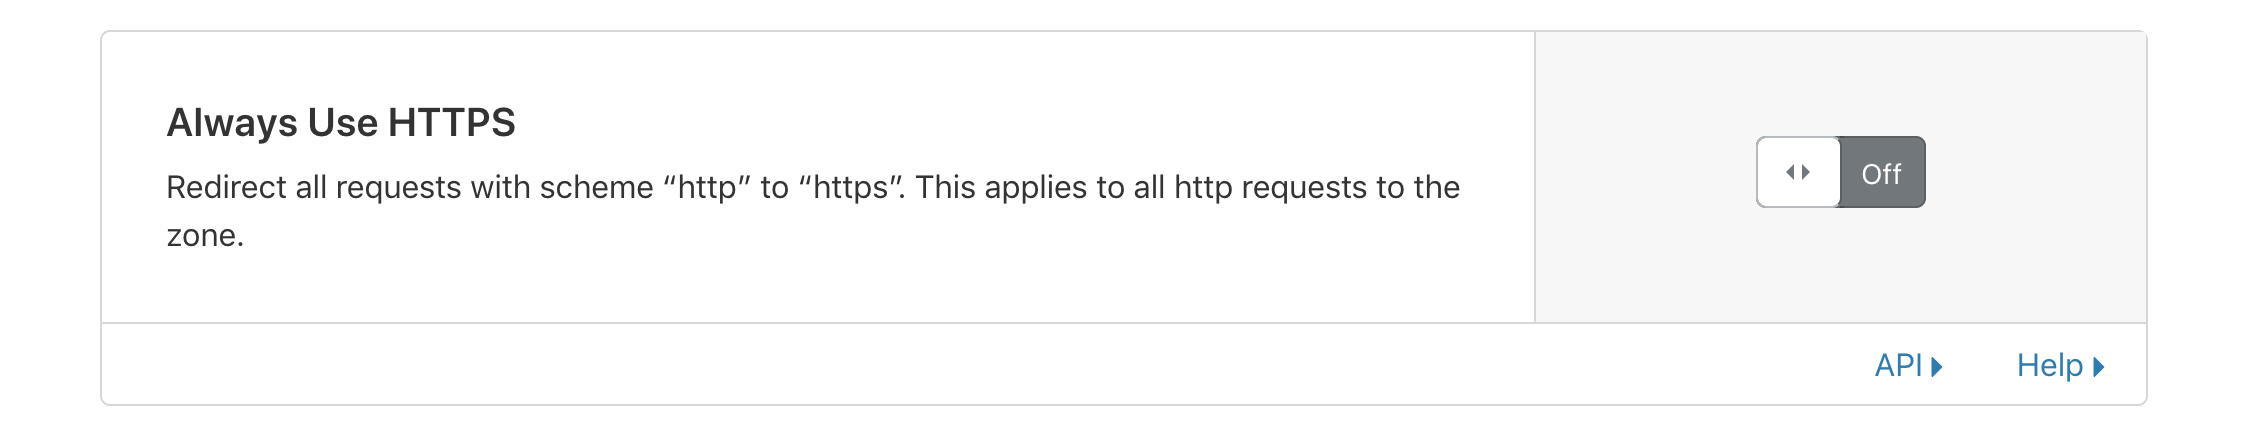 Giao diện bật Always HTTPS trên Cloudflare